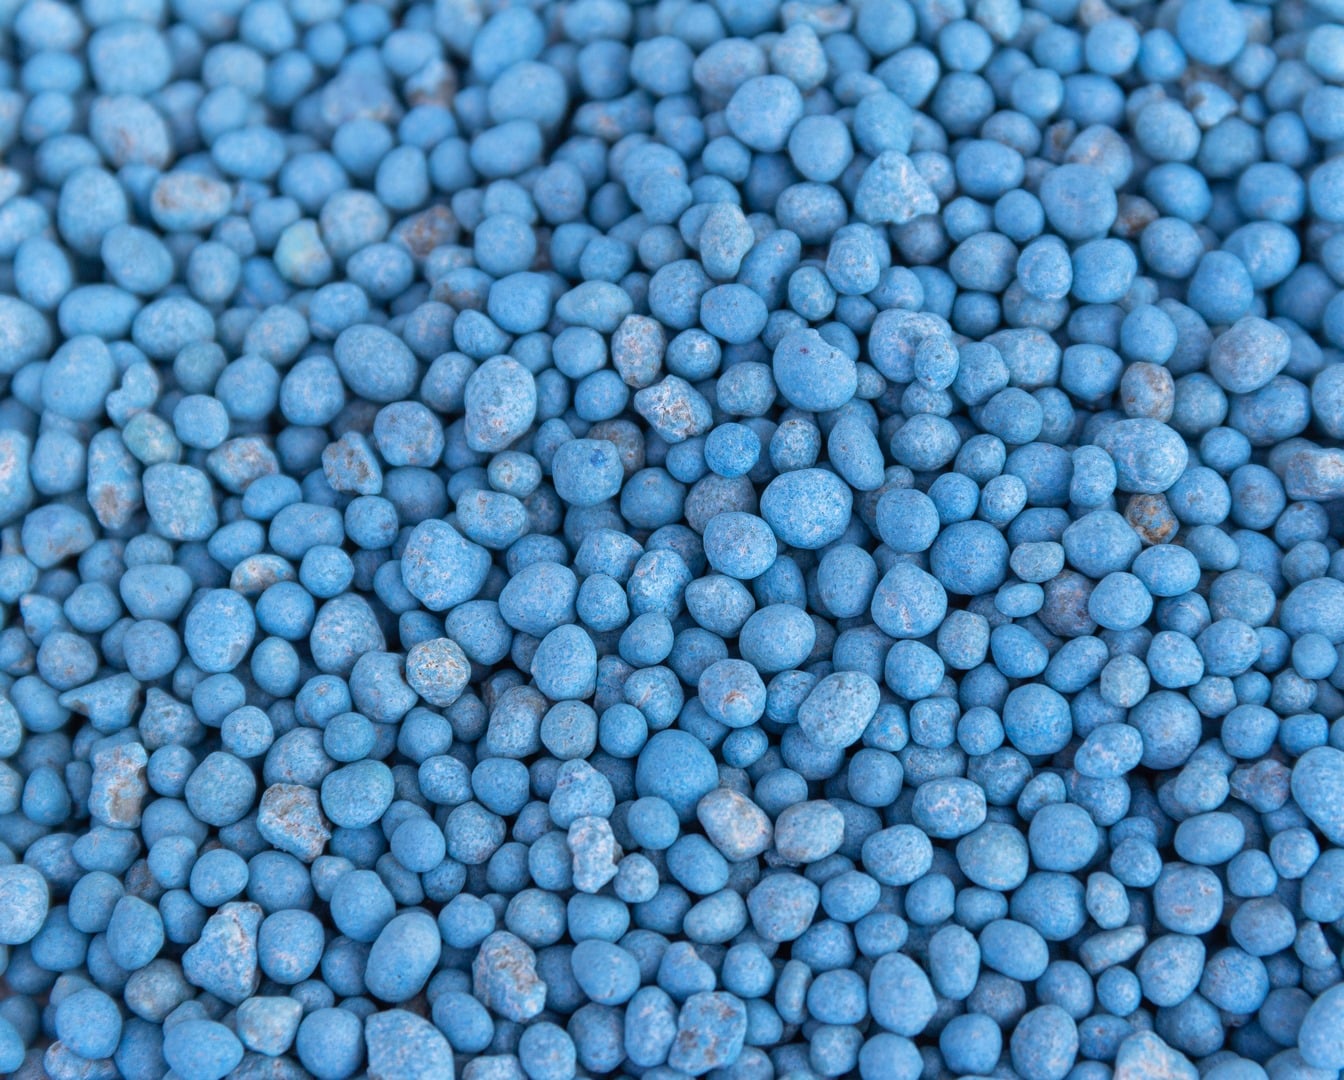 blue different shape chemical fertilizer granules as abstract background Copiar 2